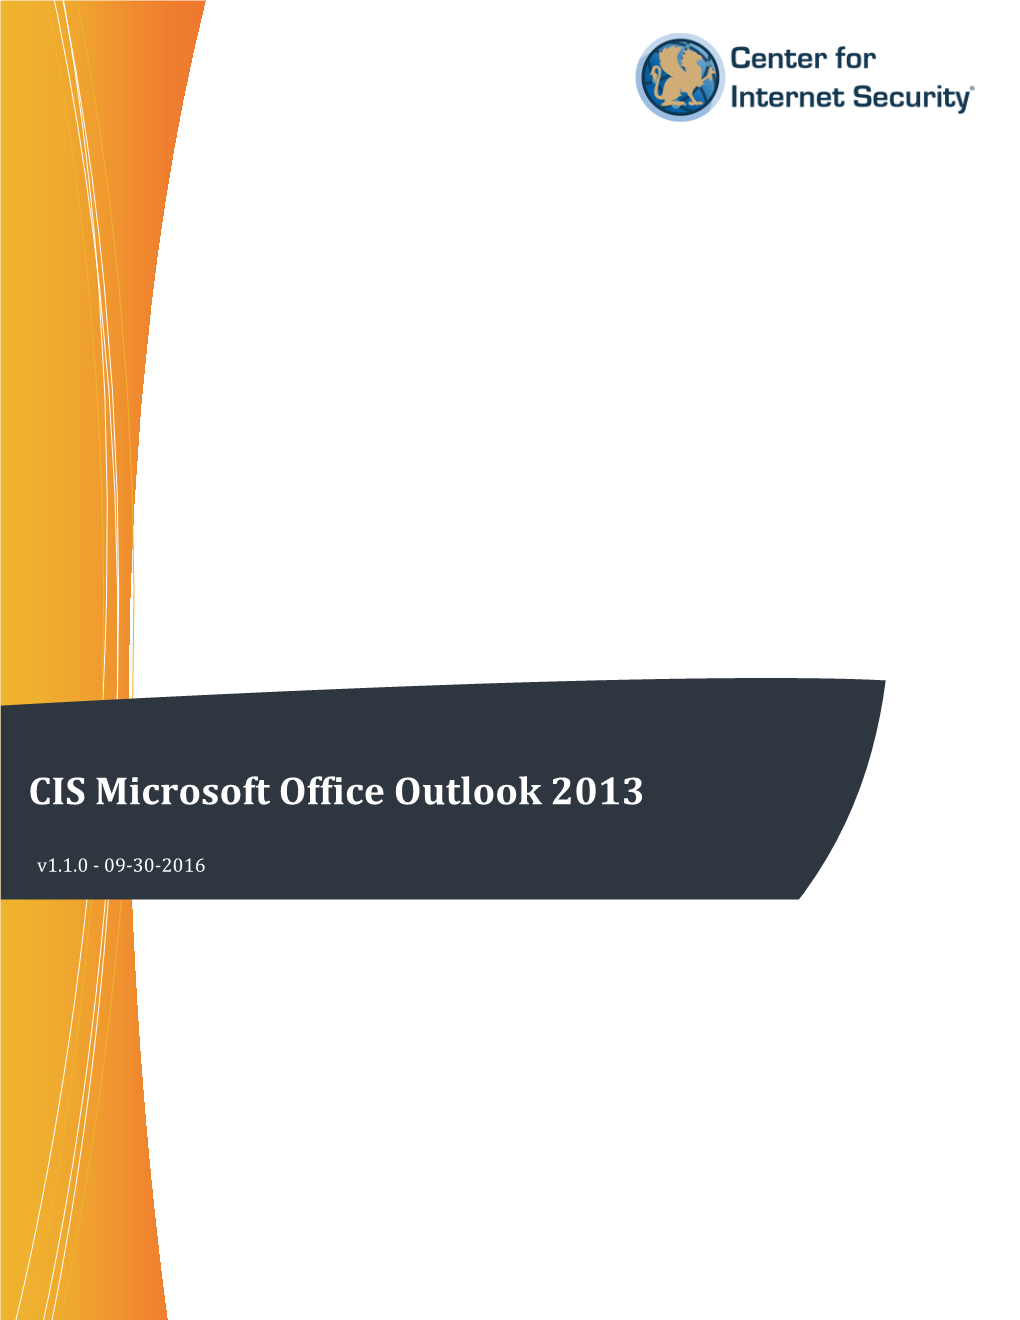 CIS Microsoft Office Outlook 2013 Benchmark